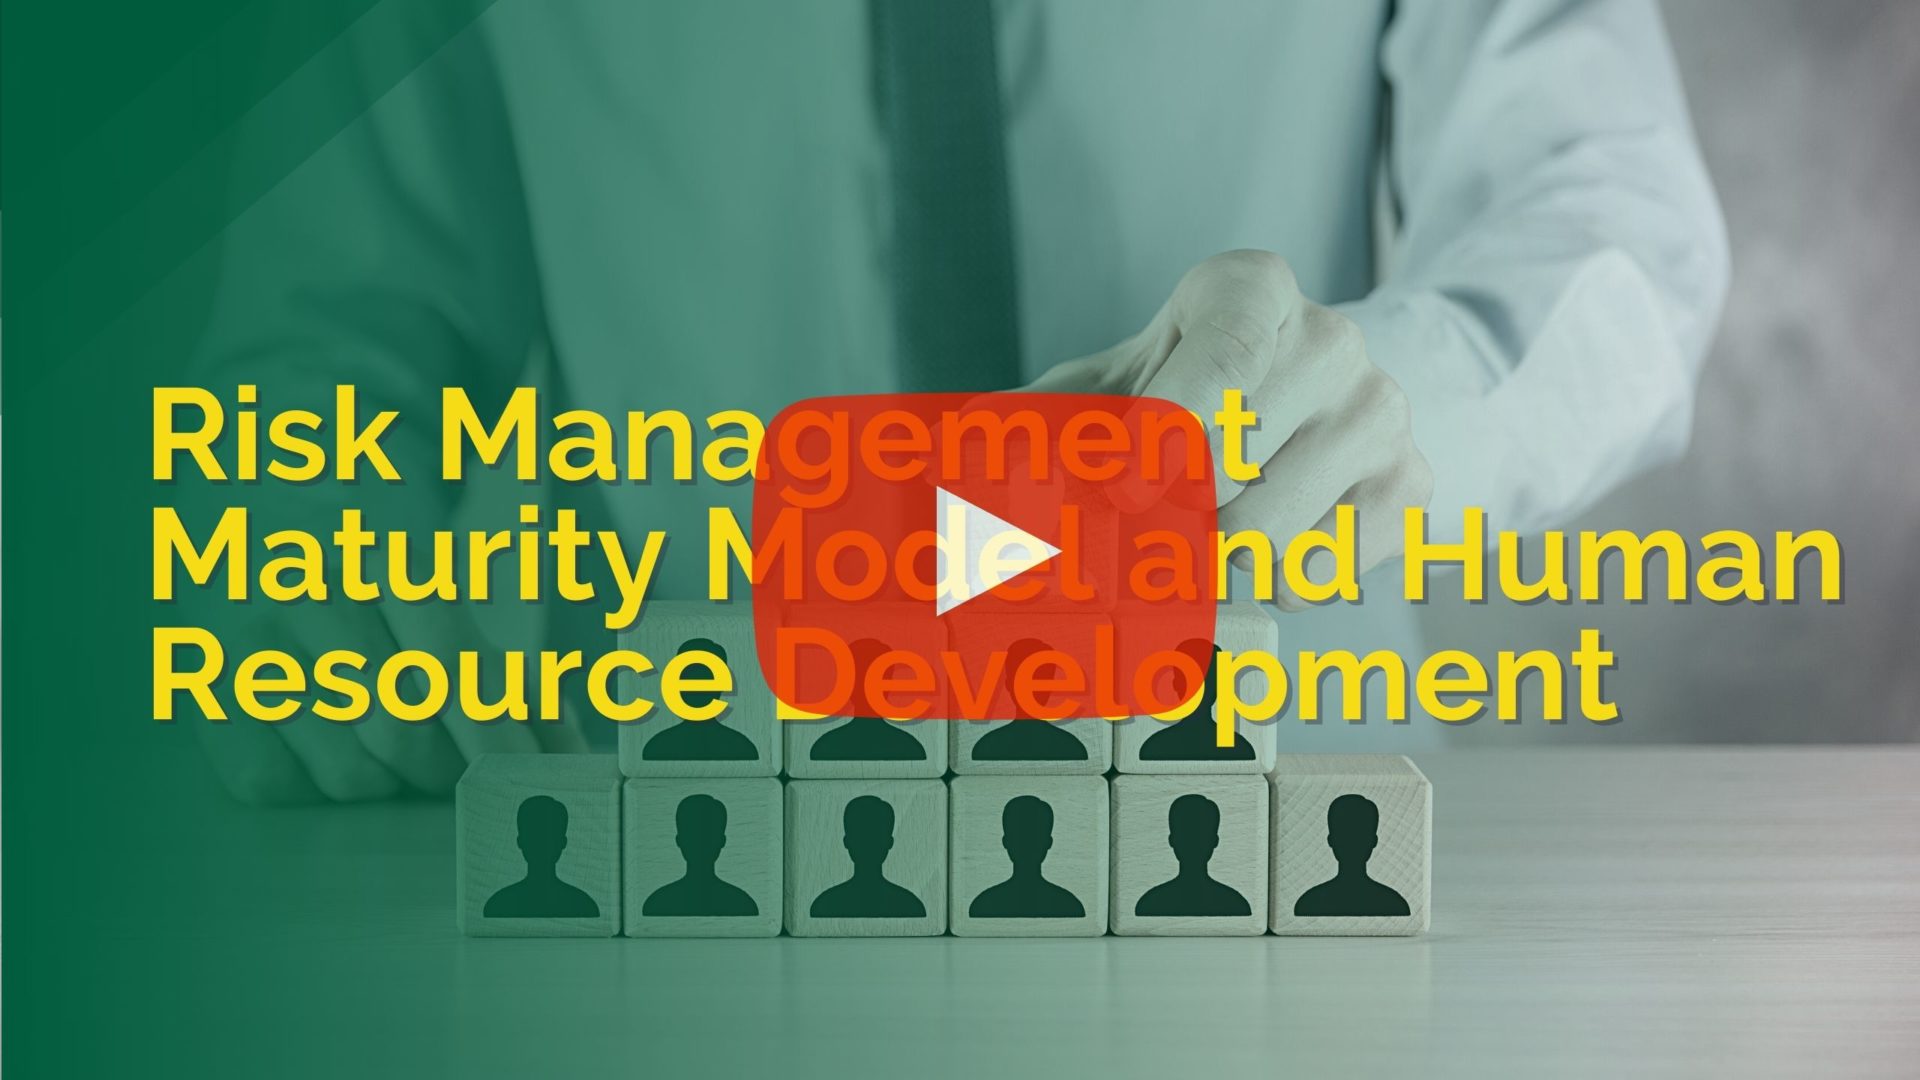 Risk Management Maturity Model and Human Resource Development